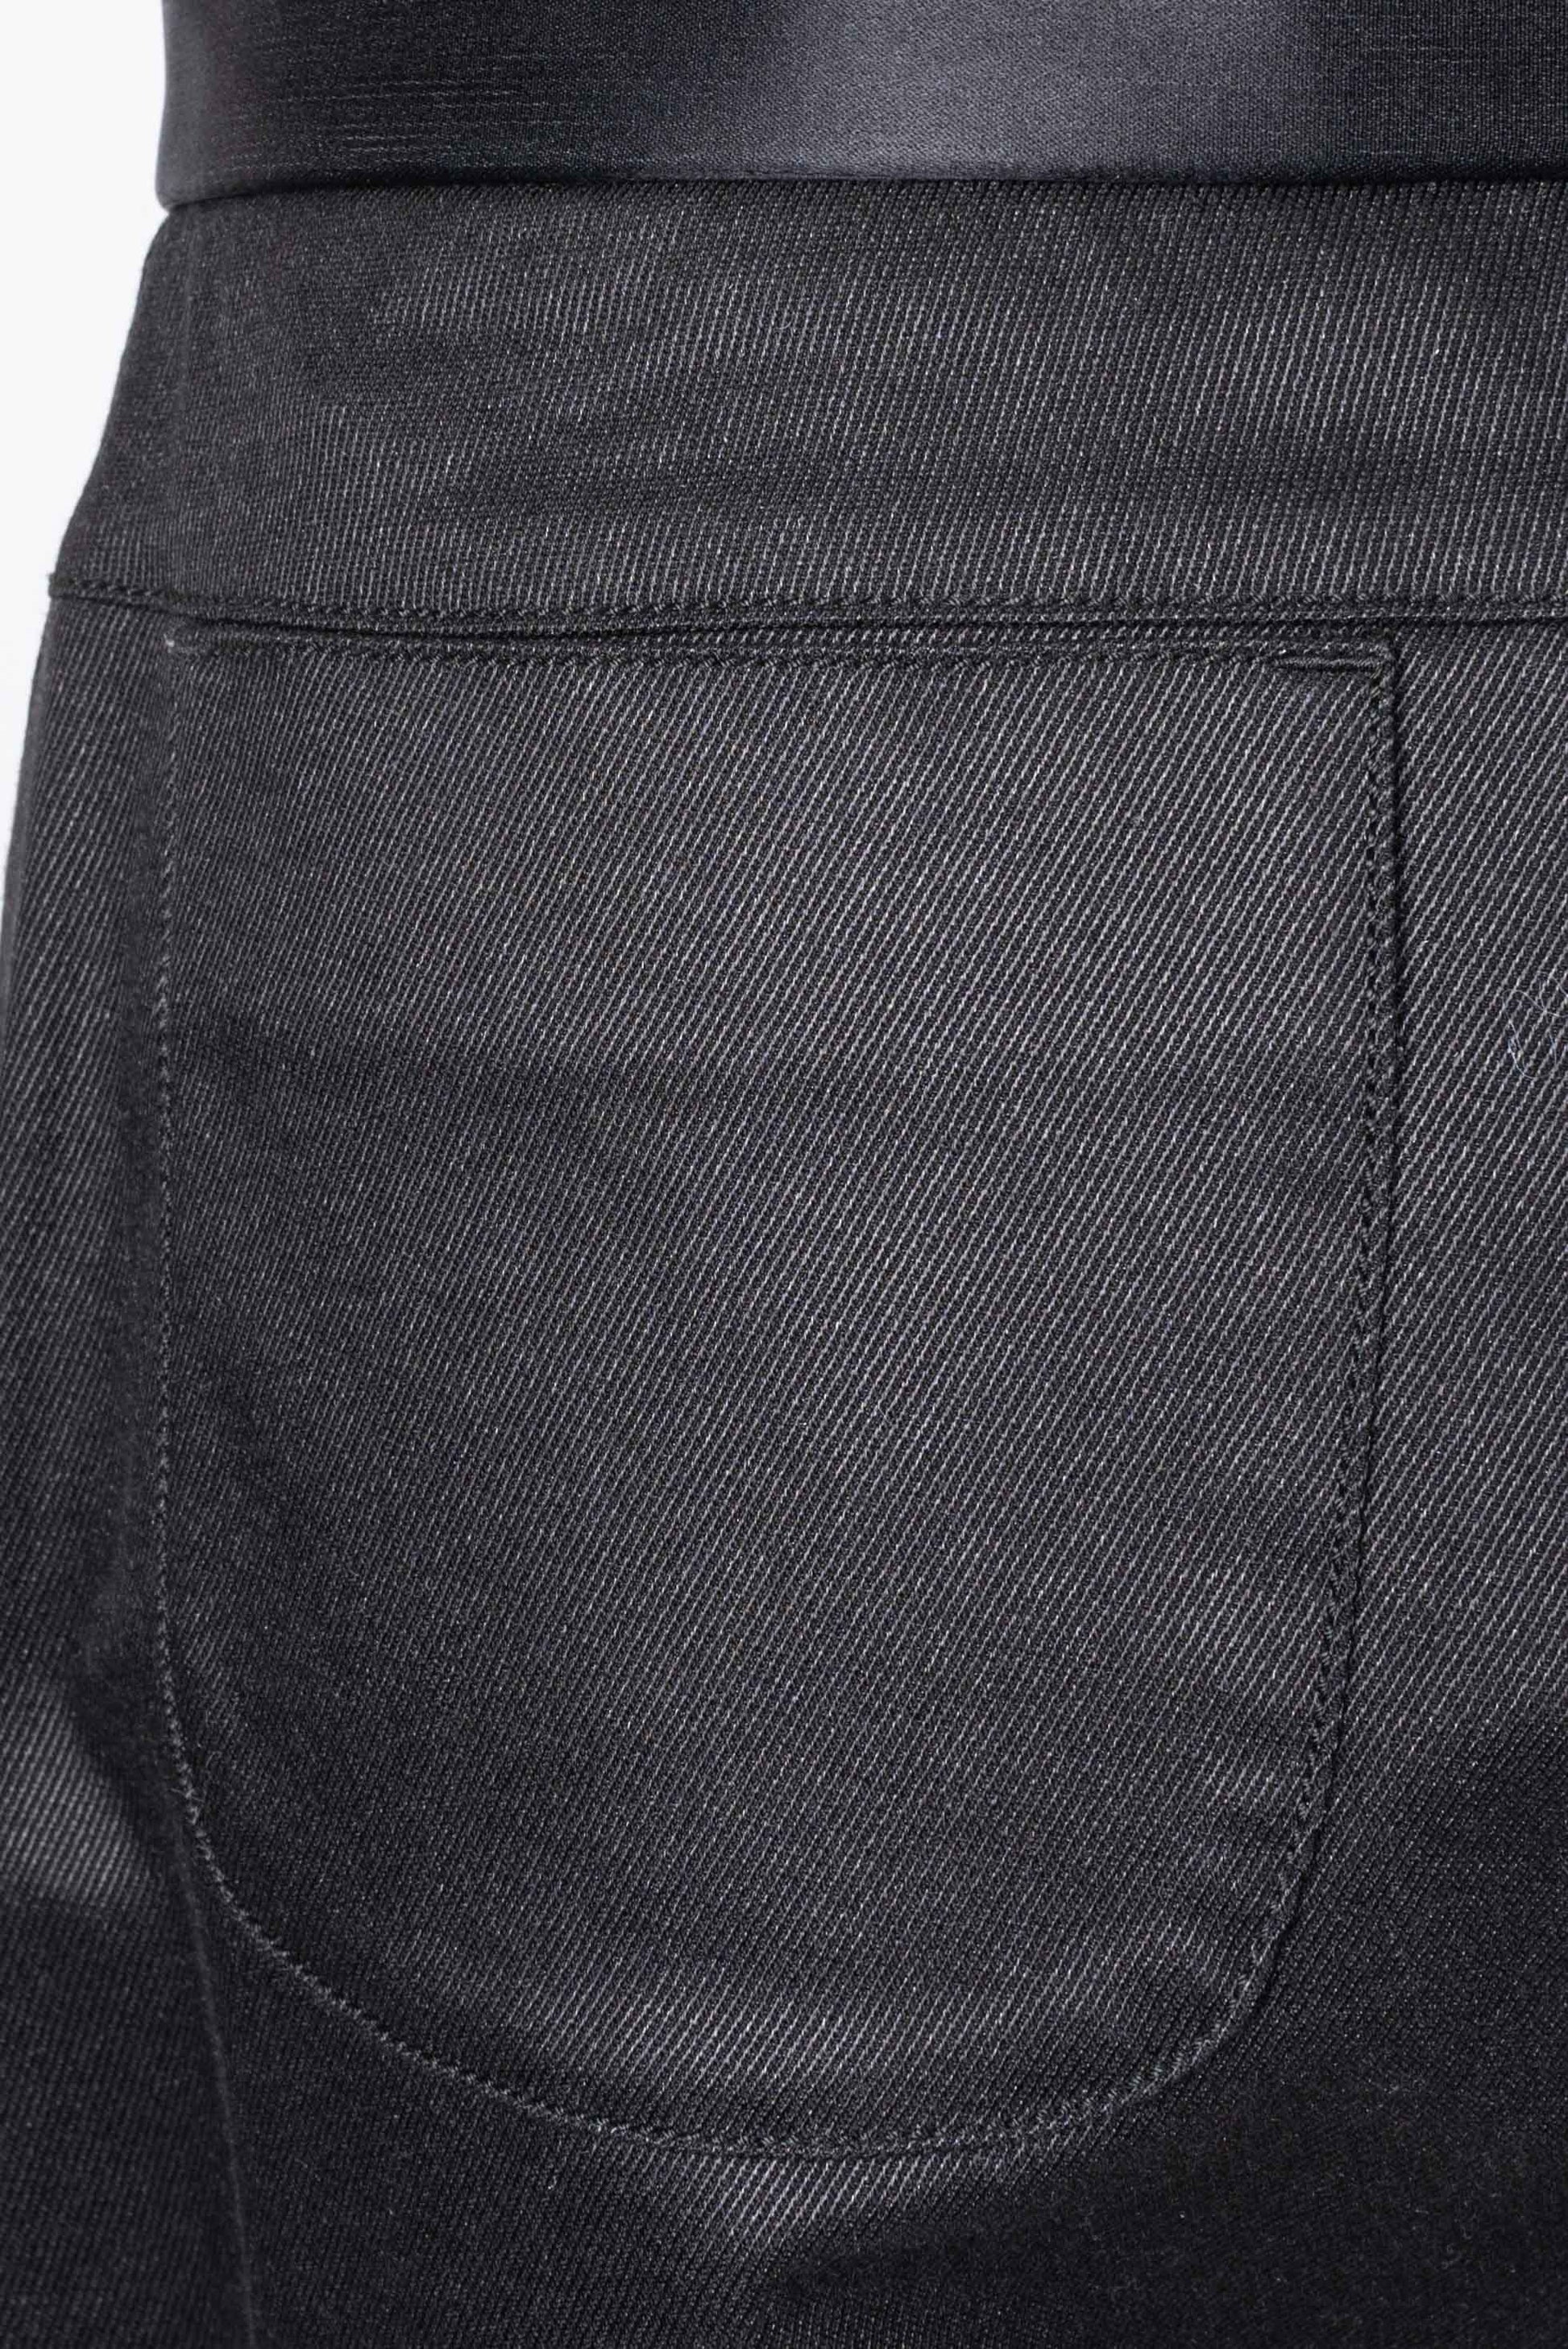 Chanel pants Fall 2005